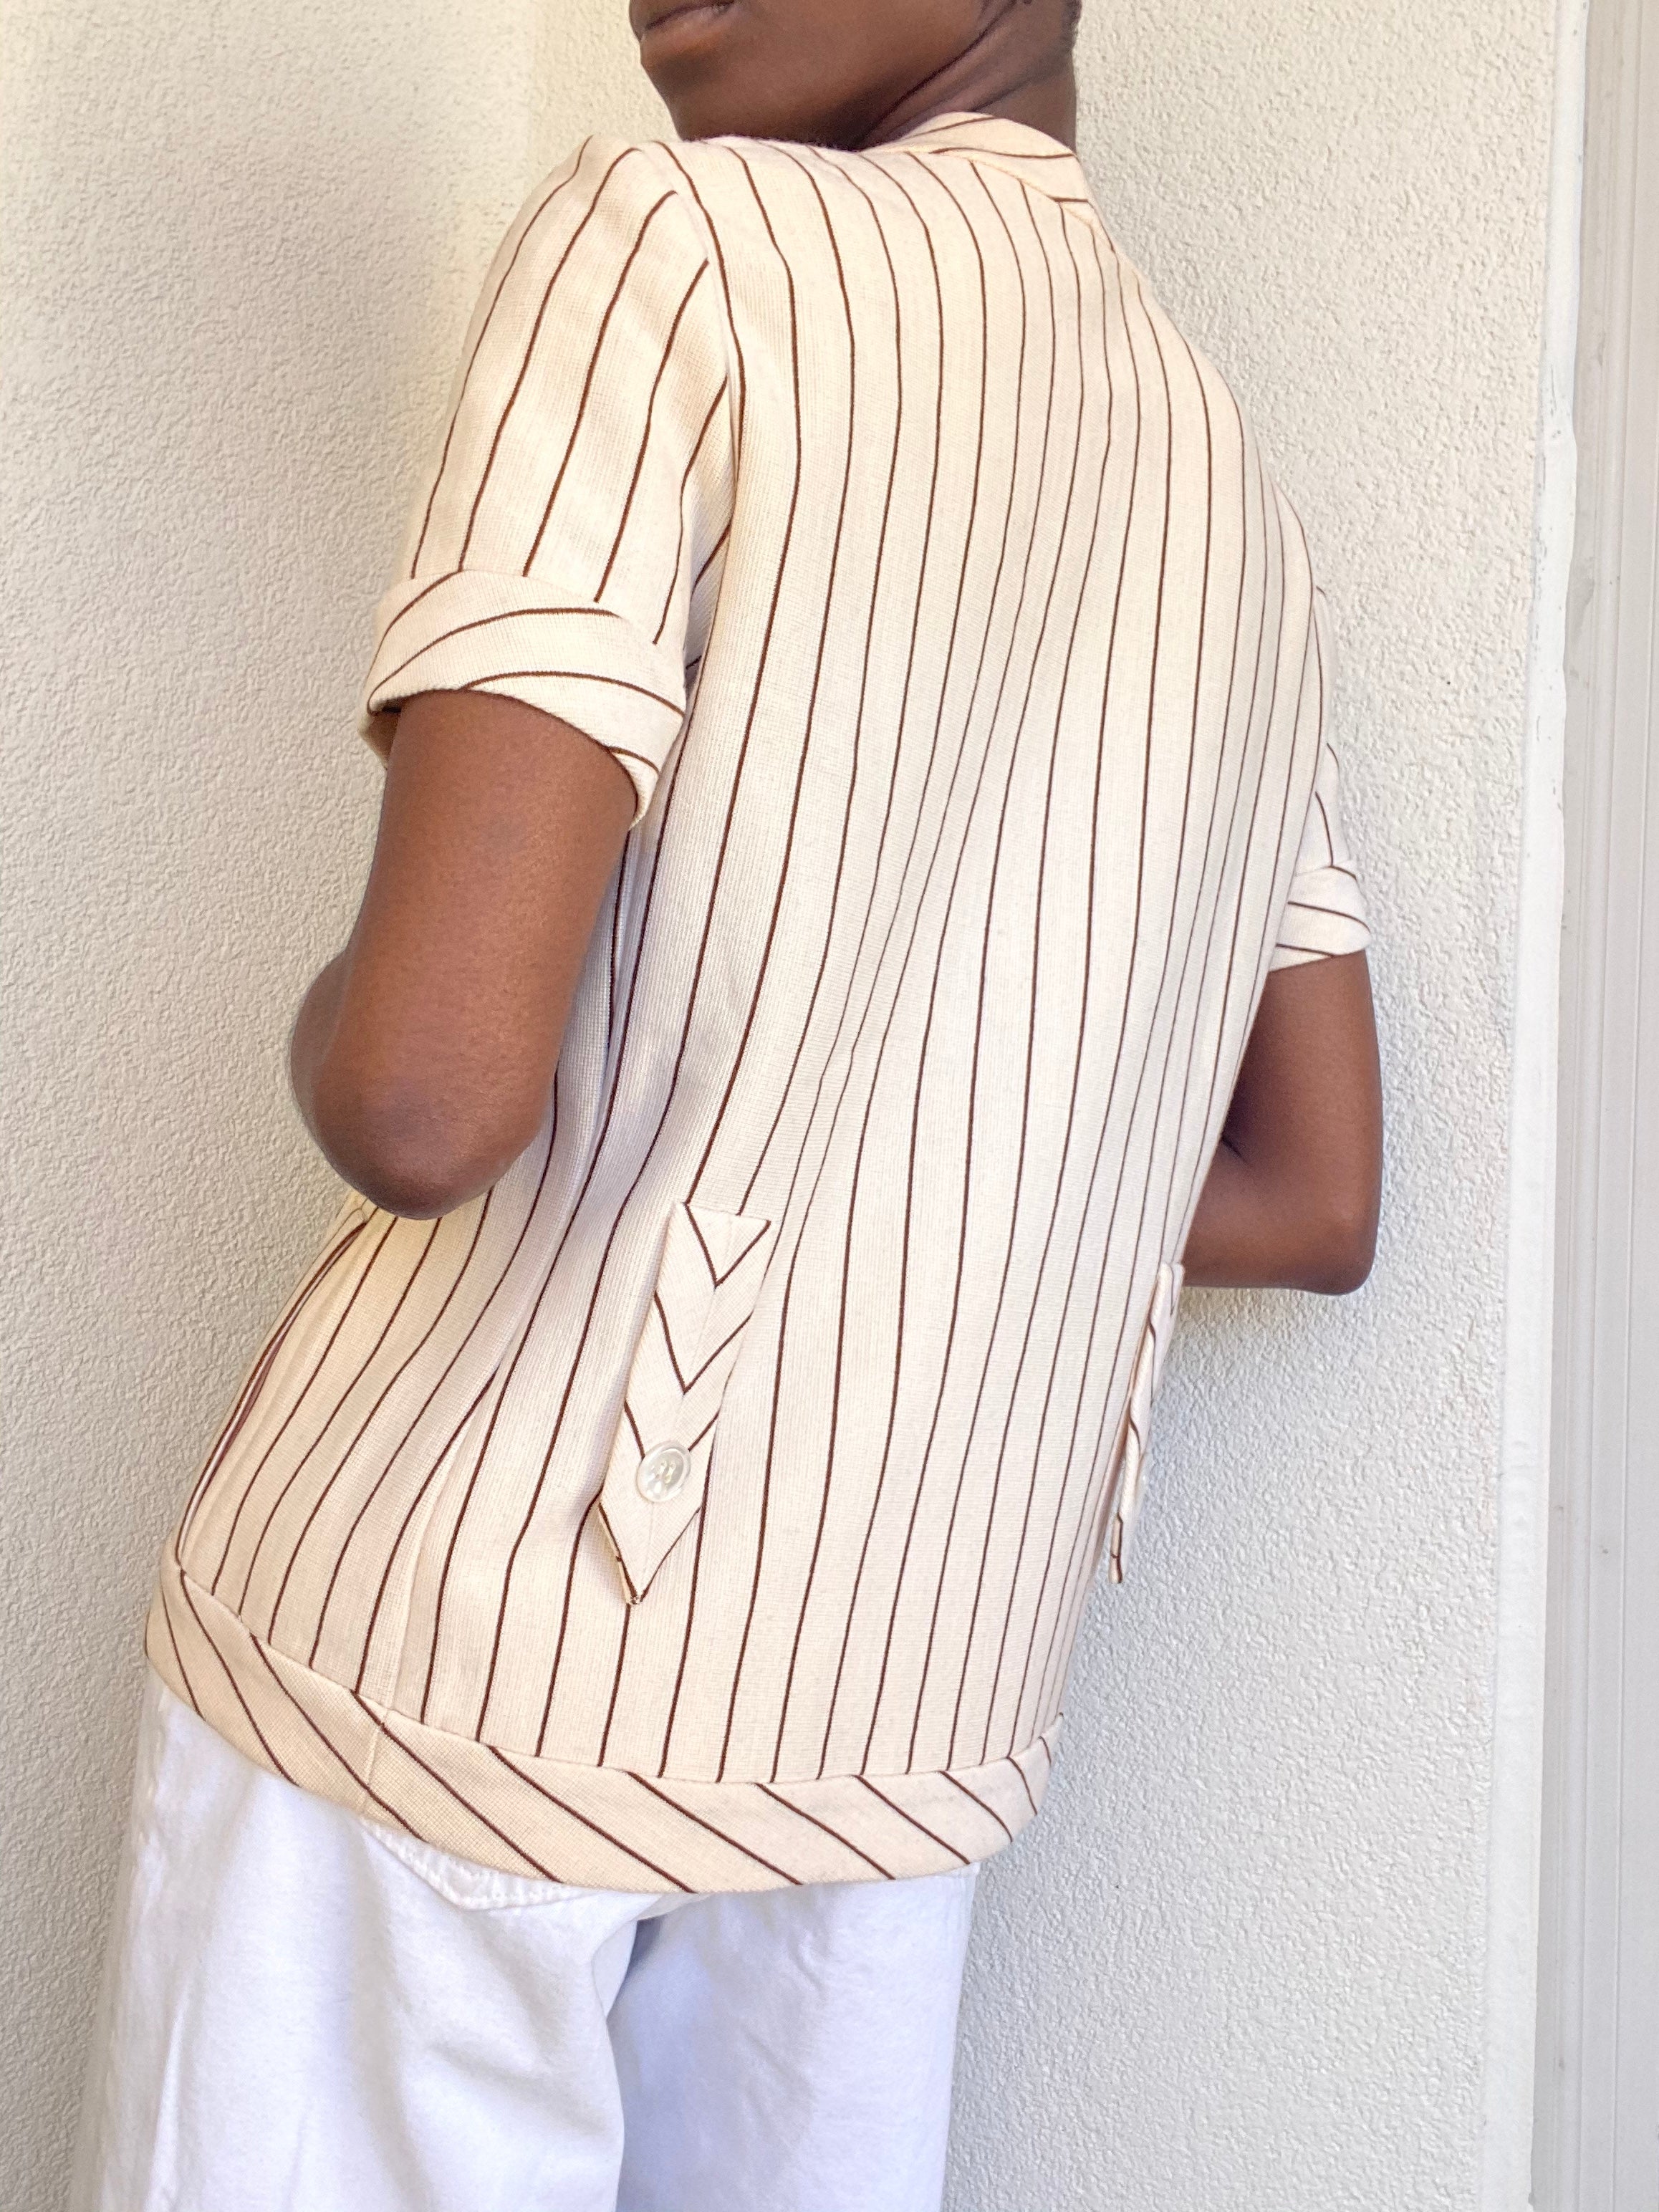 Beige Striped Short Sleeve Blouse